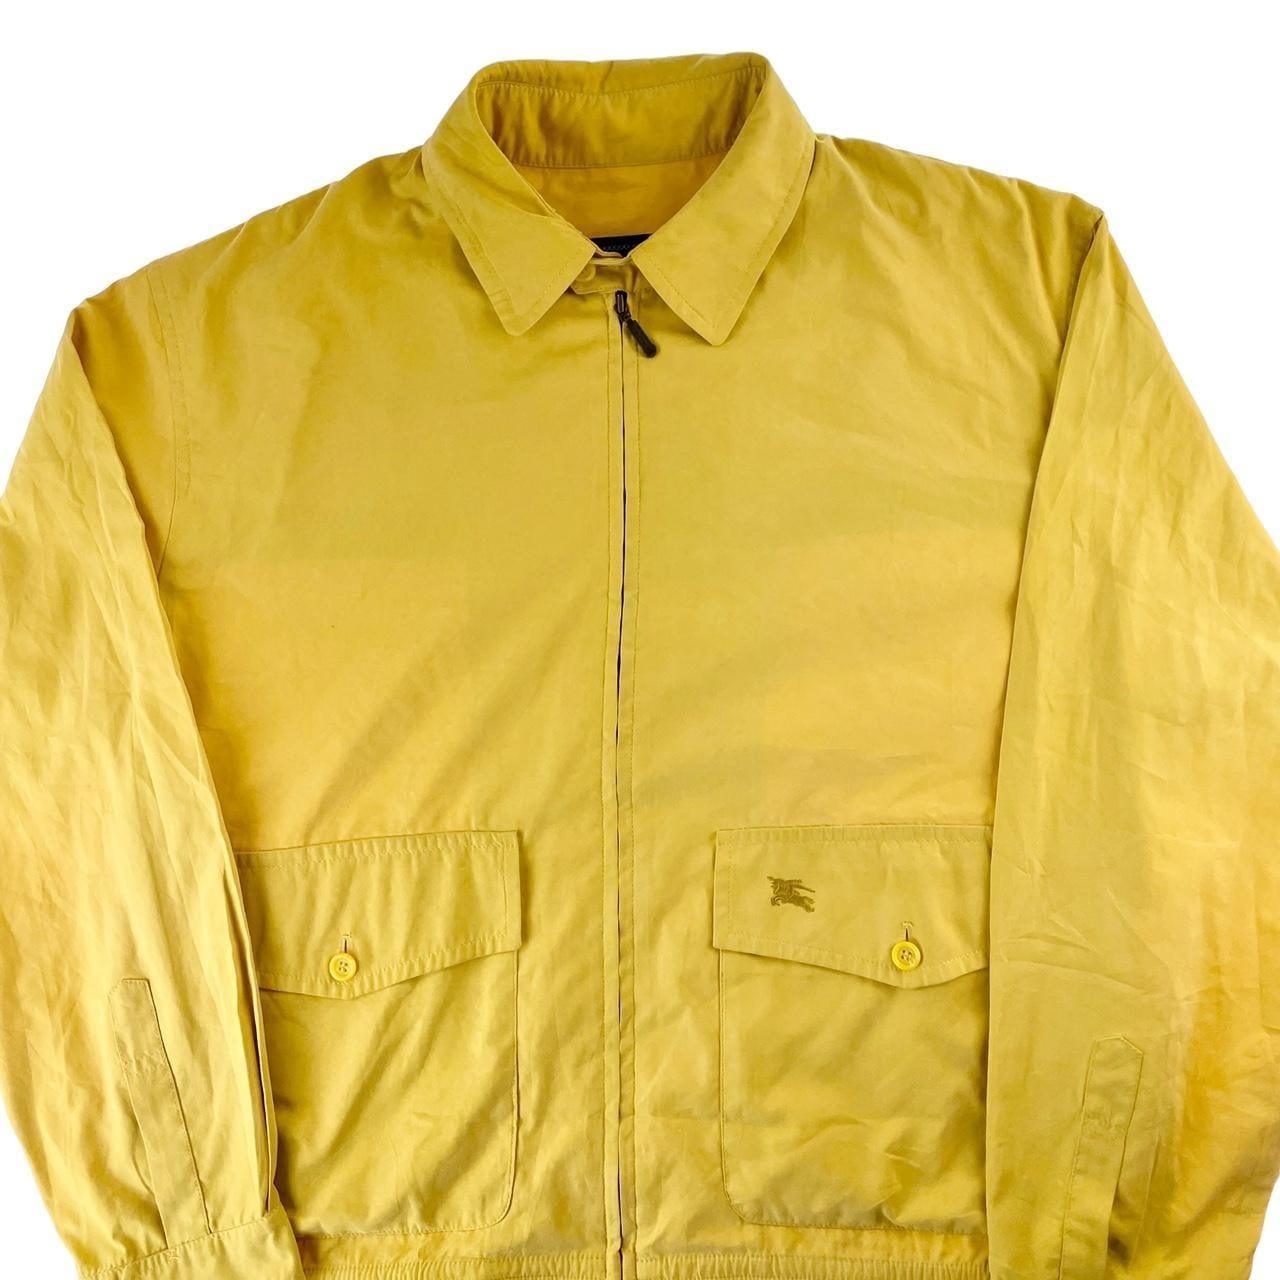 Vintage Burberry jacket size M - Known Source